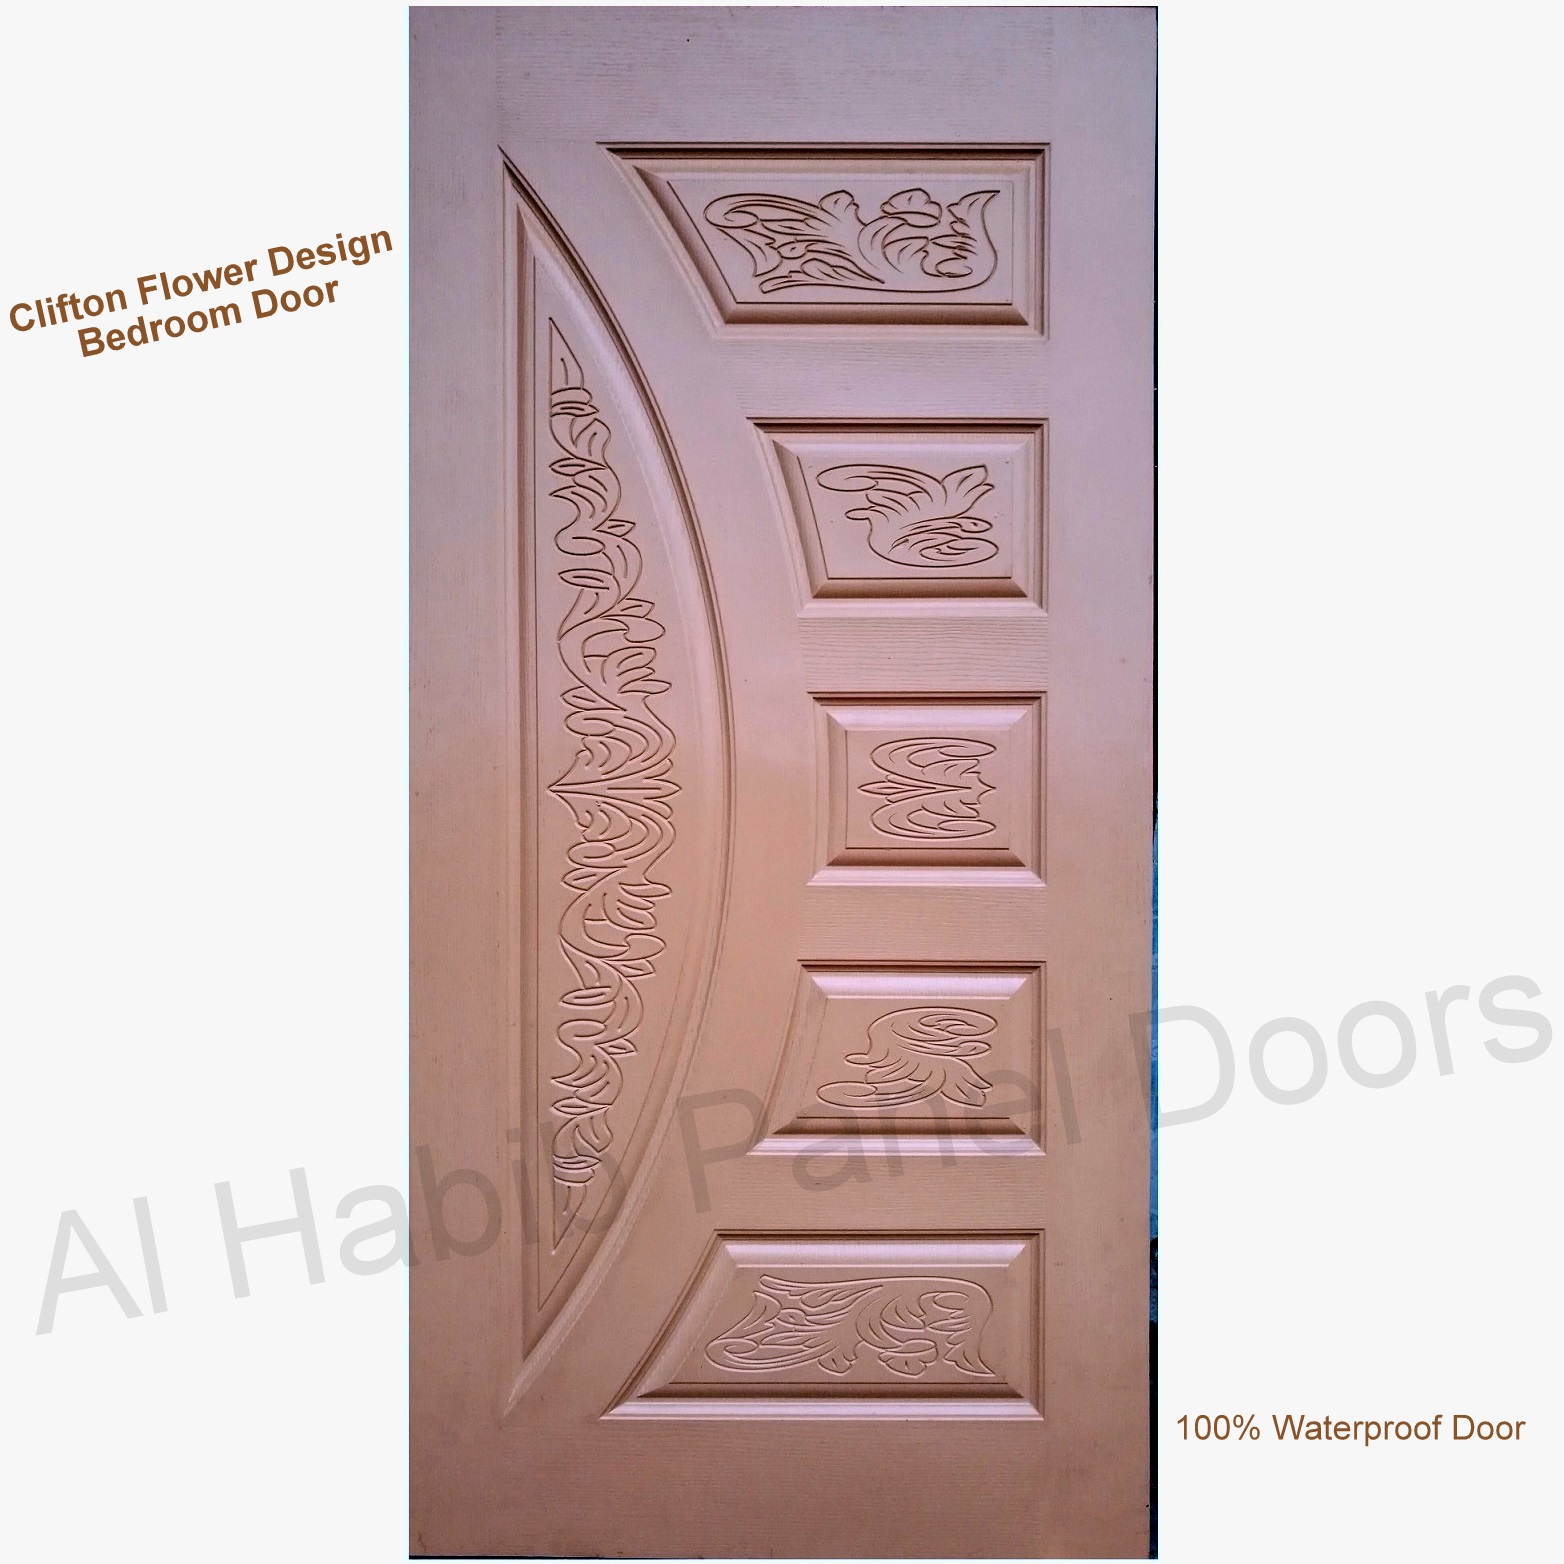 Fiberglass CNC Carving Bedroom Door Clifton Flower